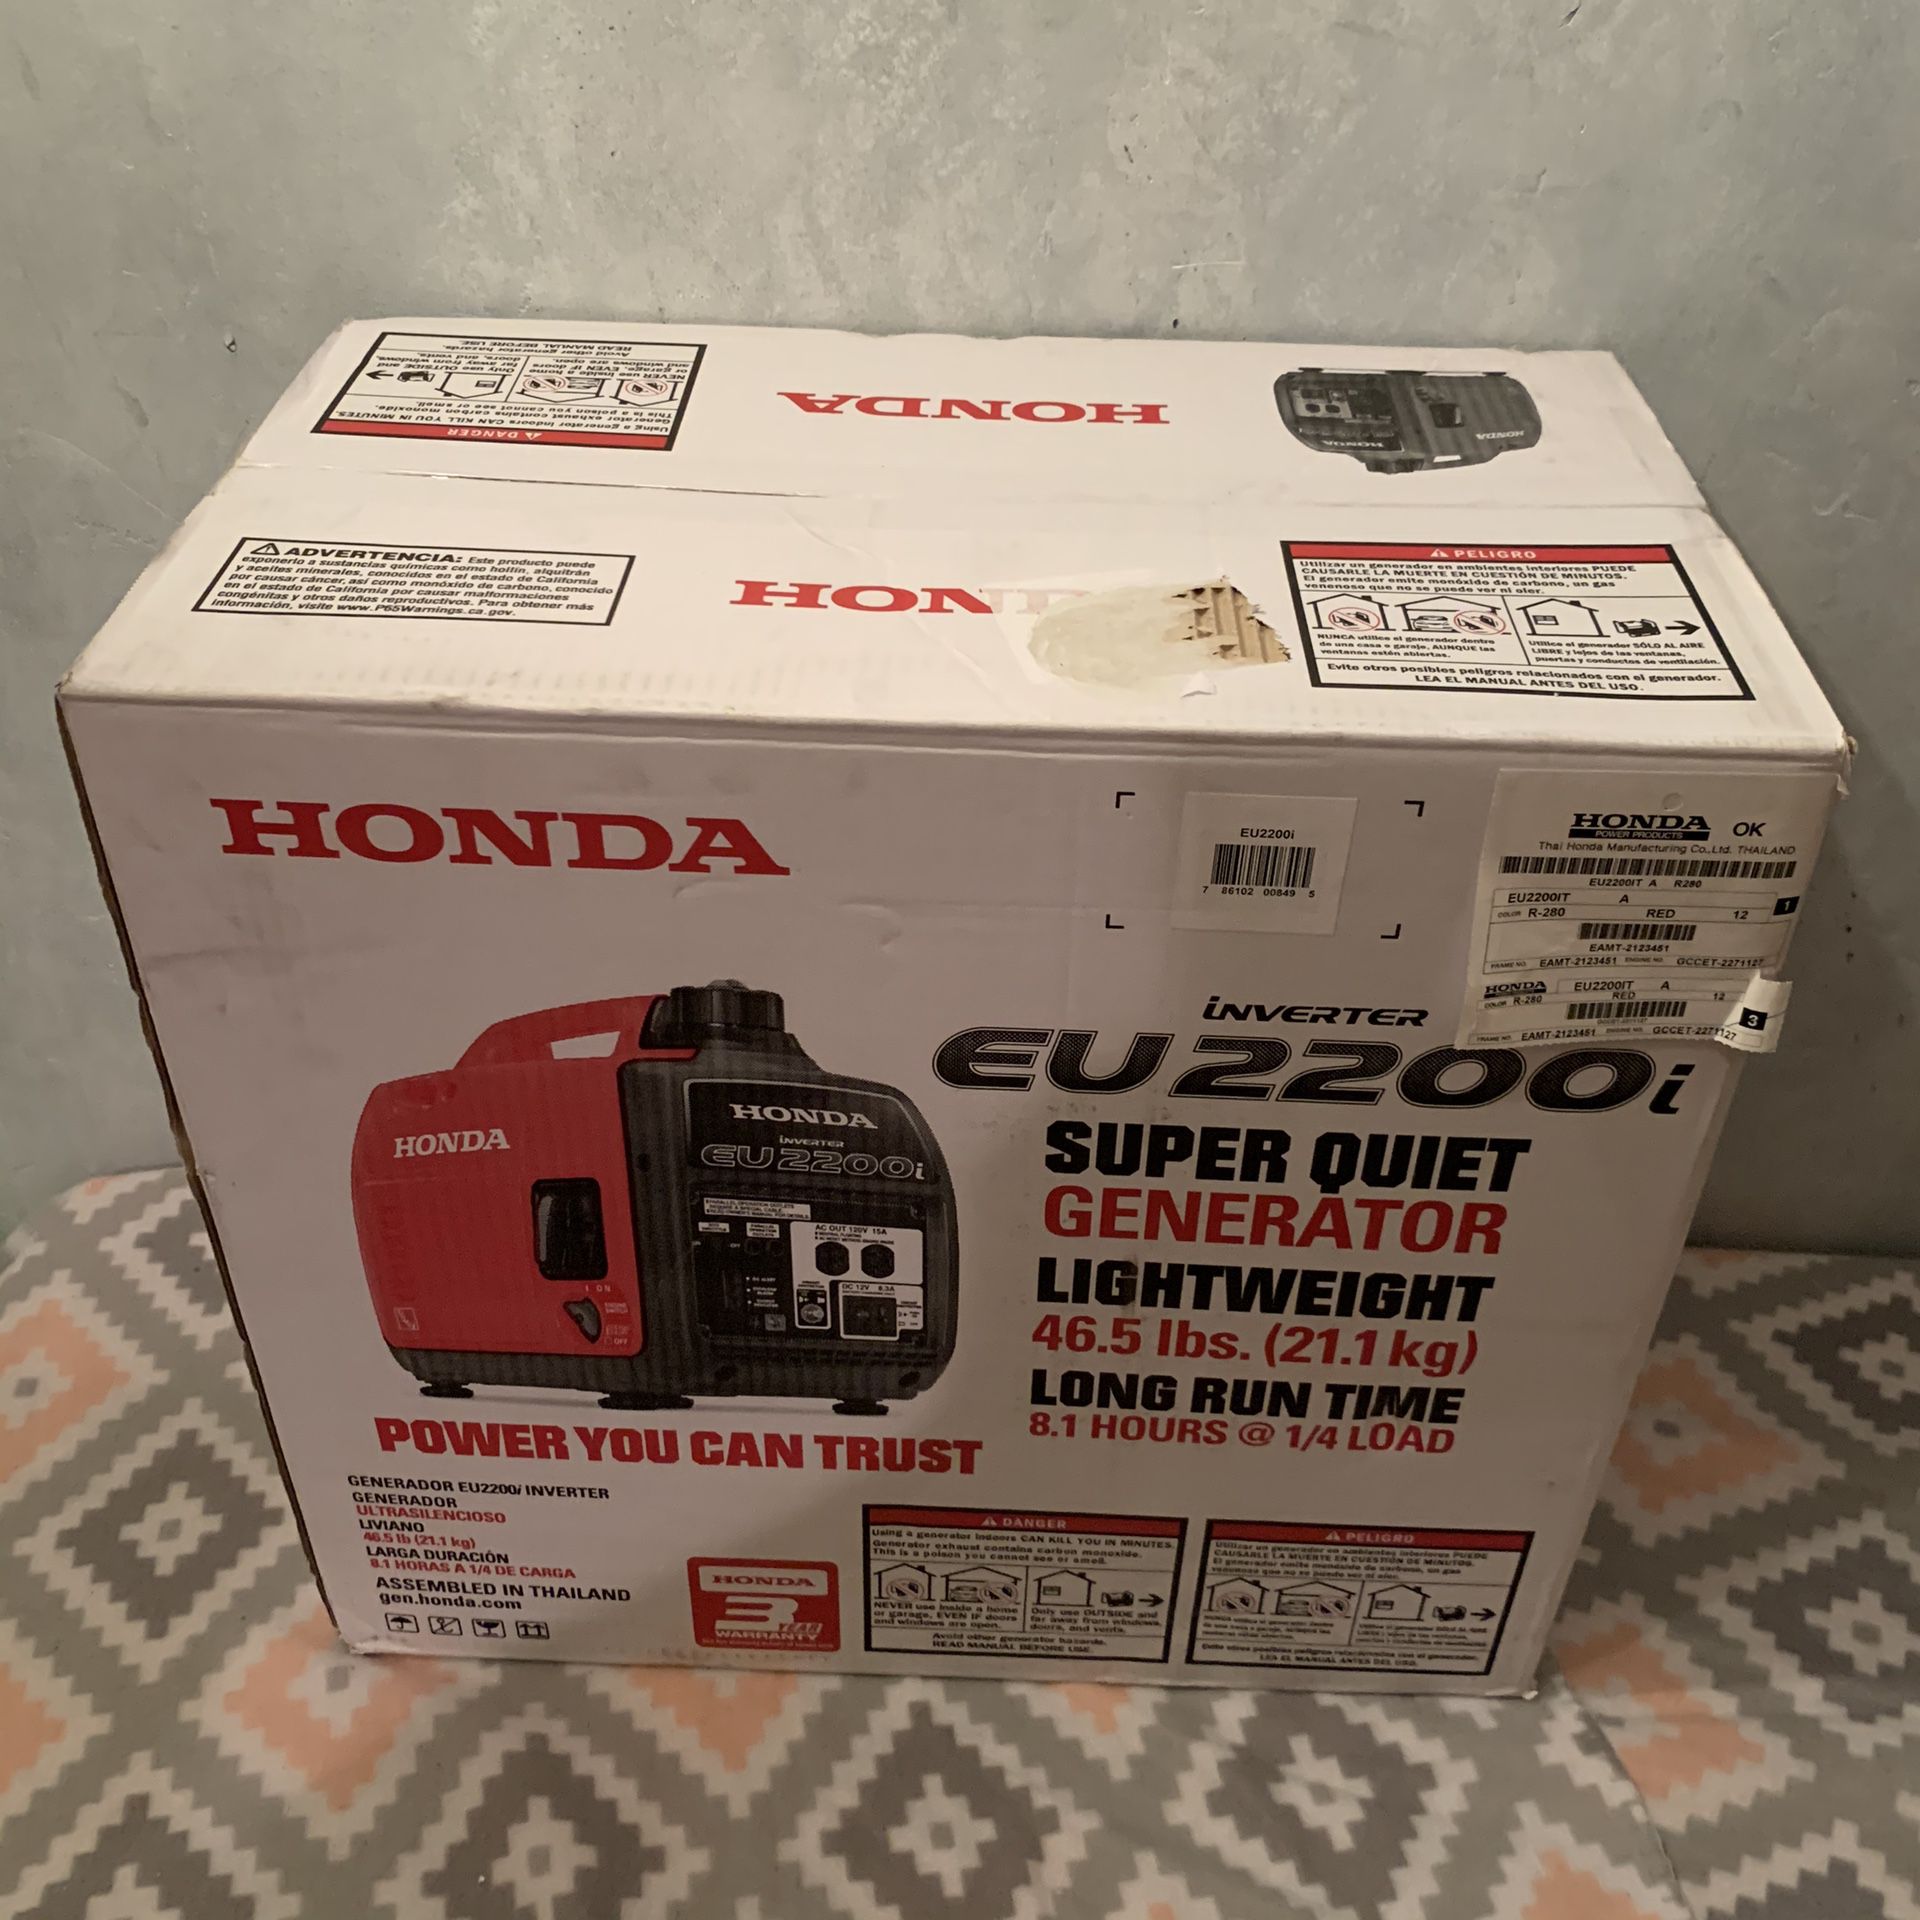 Honda 2200i Generator